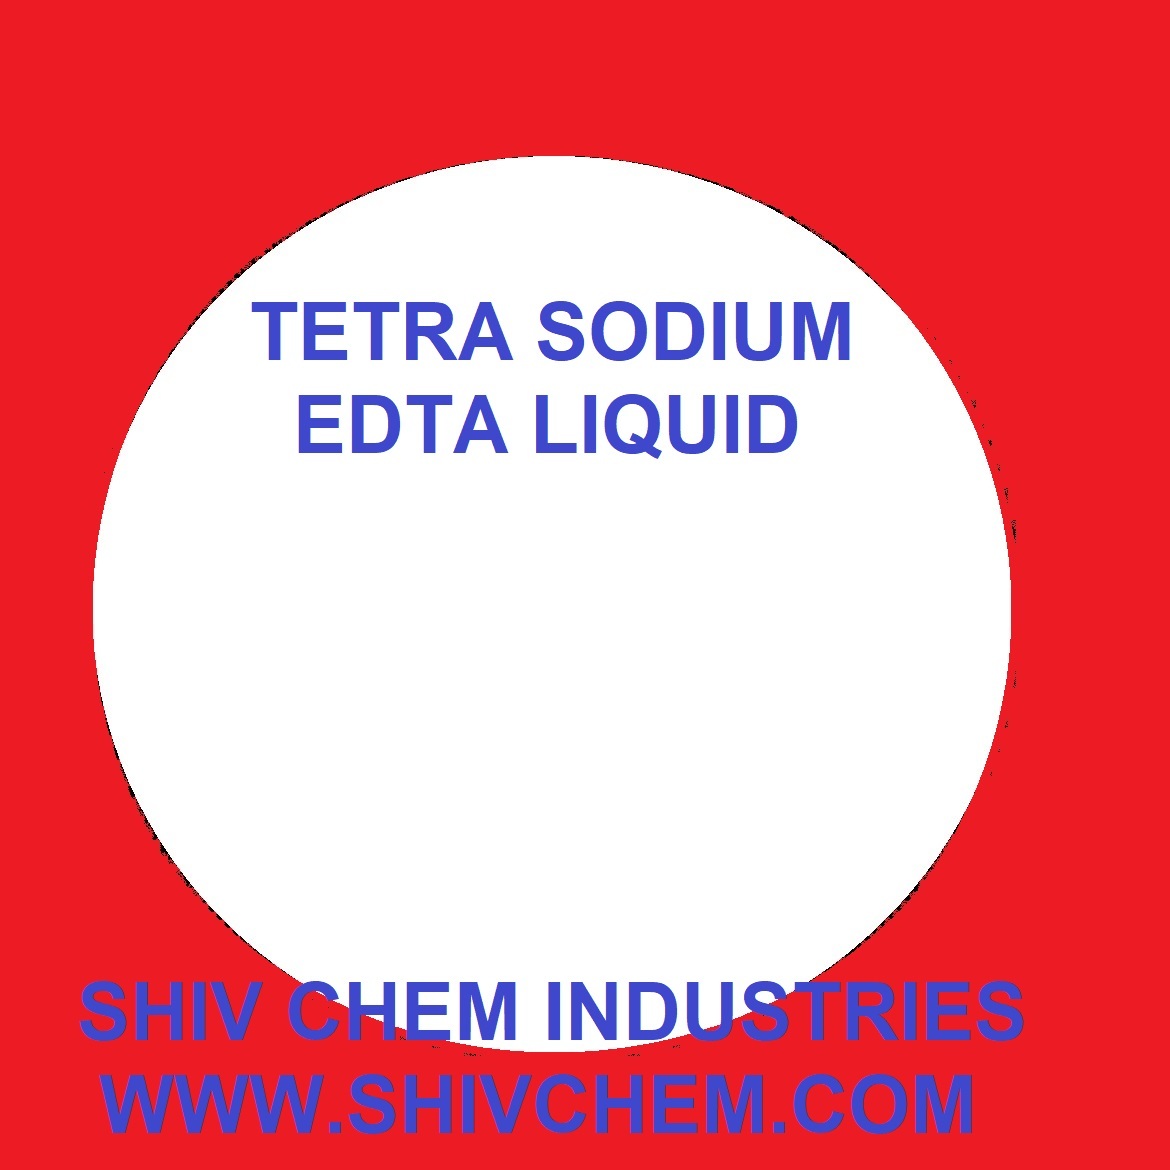 Tetra Sodium Edta Liquid